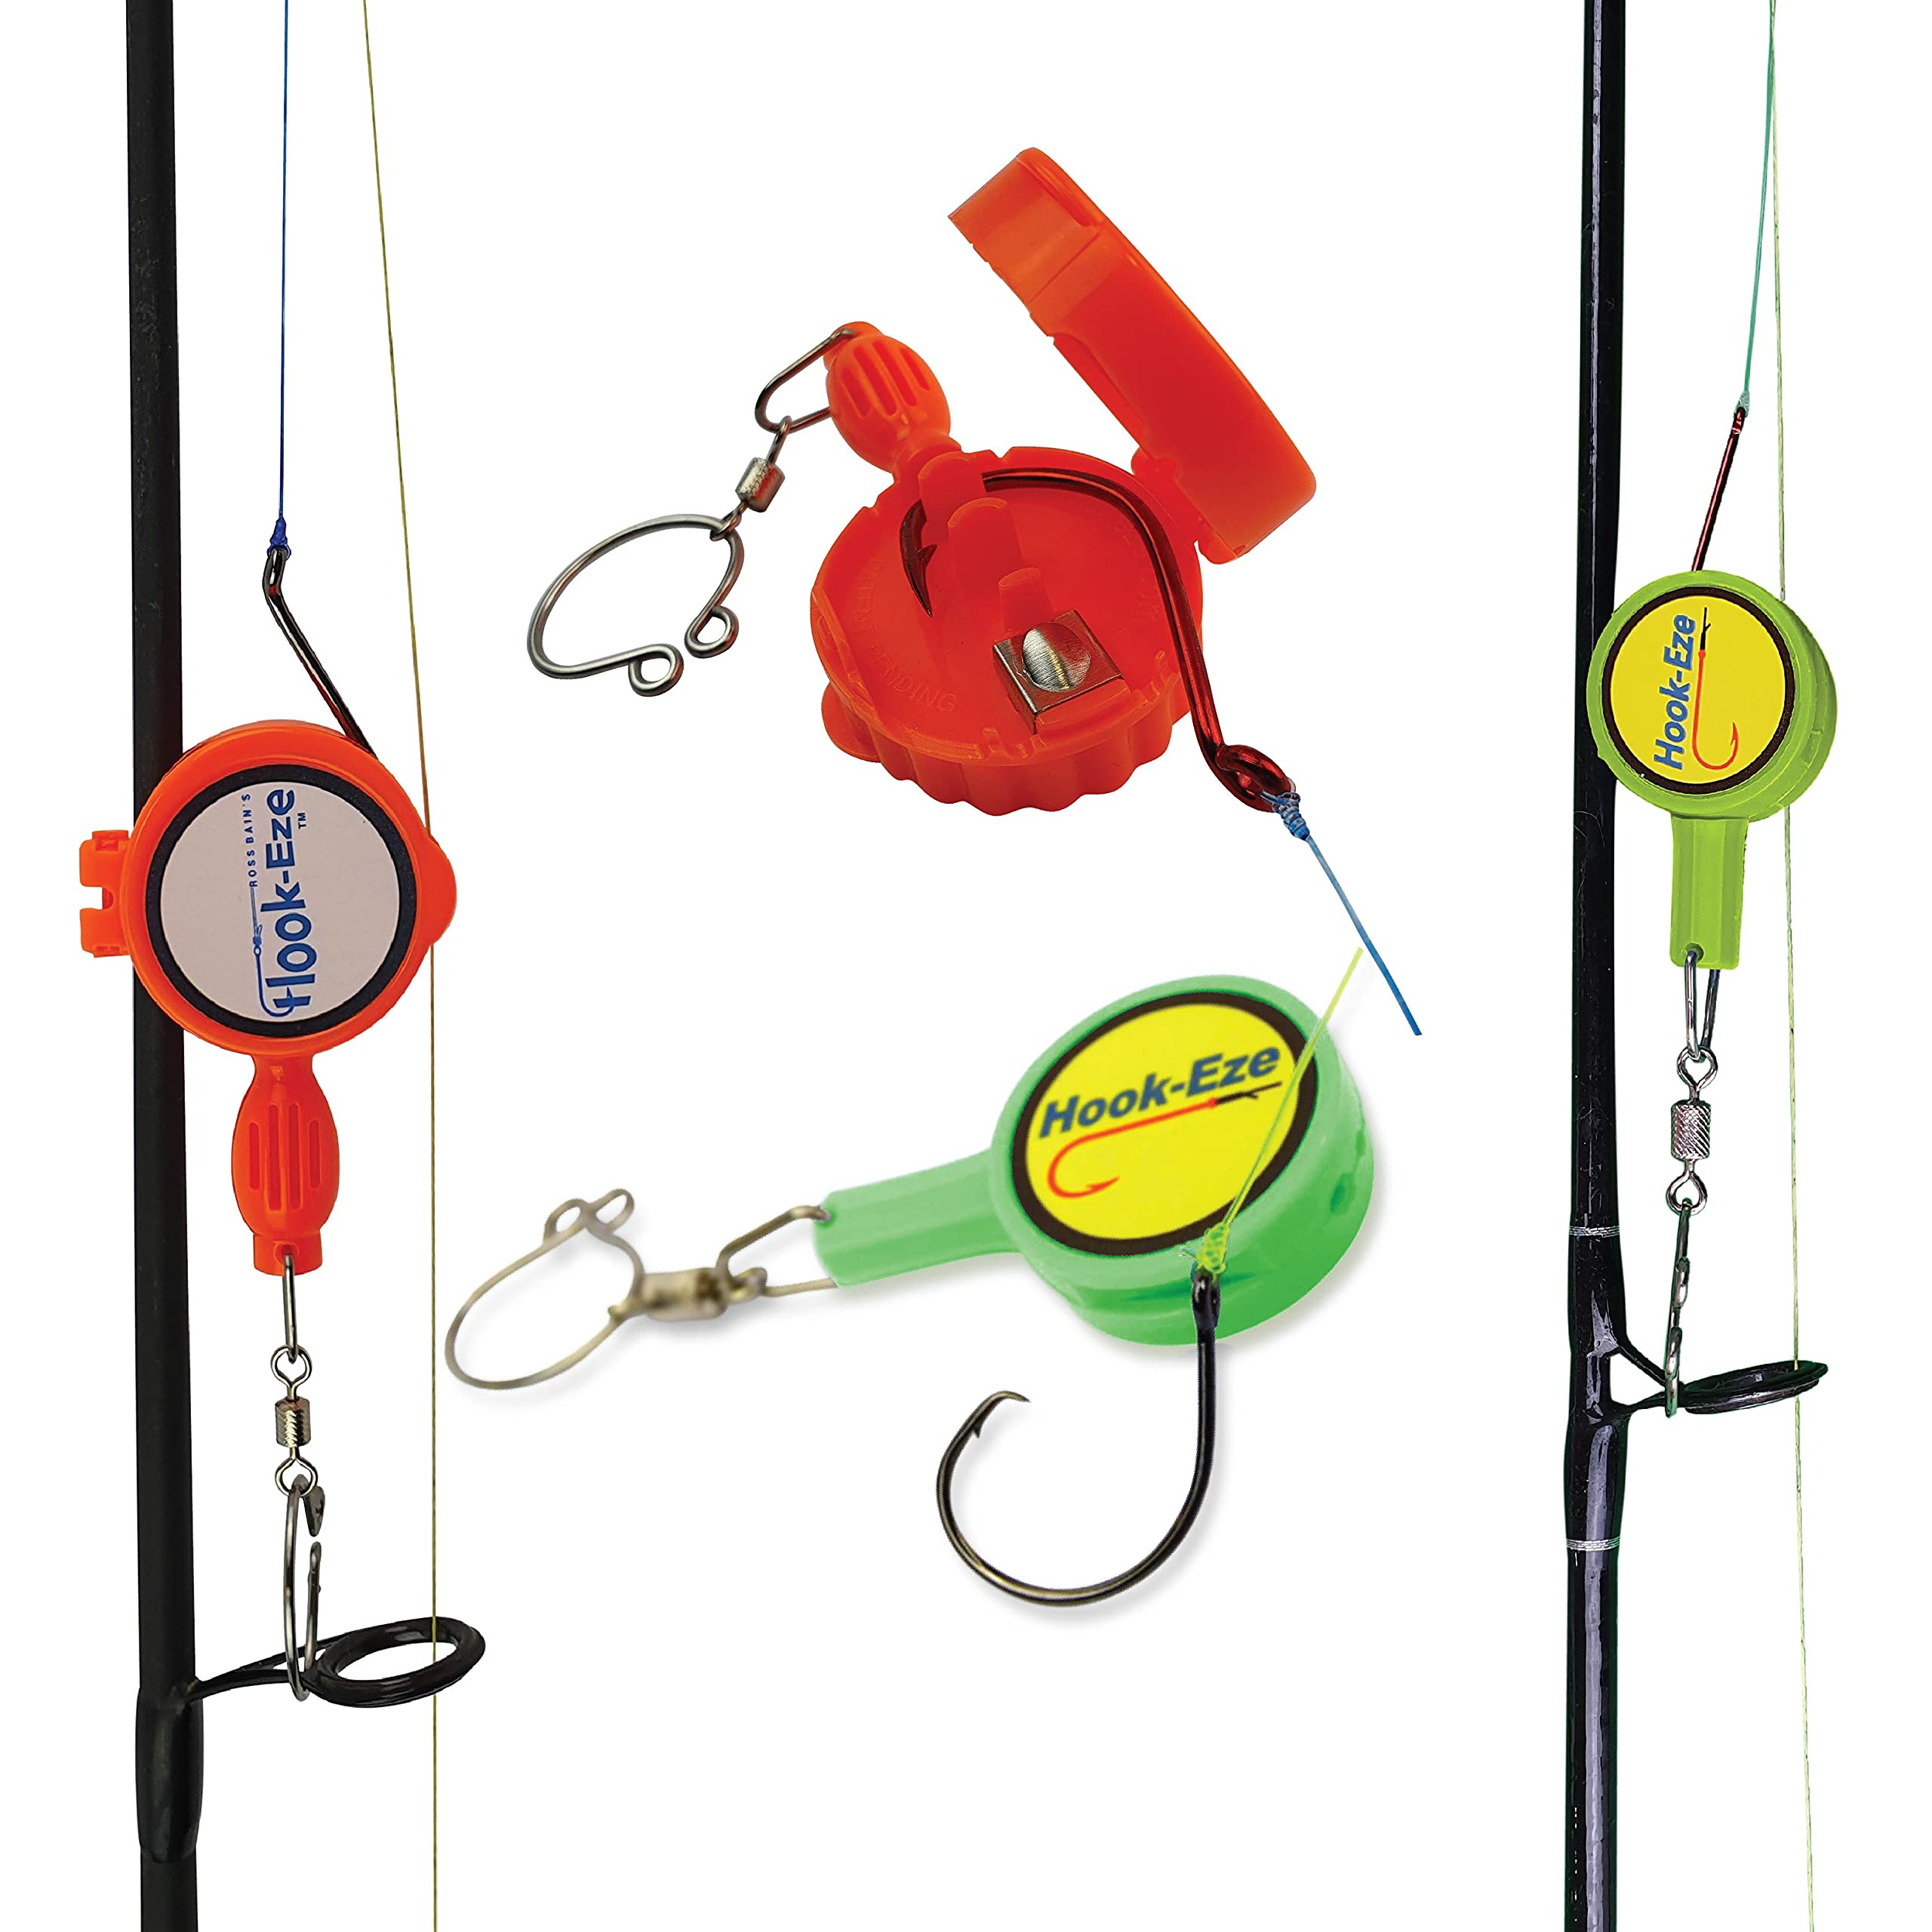 HOOK-EZE Fly Fishing Safe Knot Tying Tool, Standard Green & Large Orange Combo - for Fishing Hooks, Jig Heads, Flies, Line Cutte